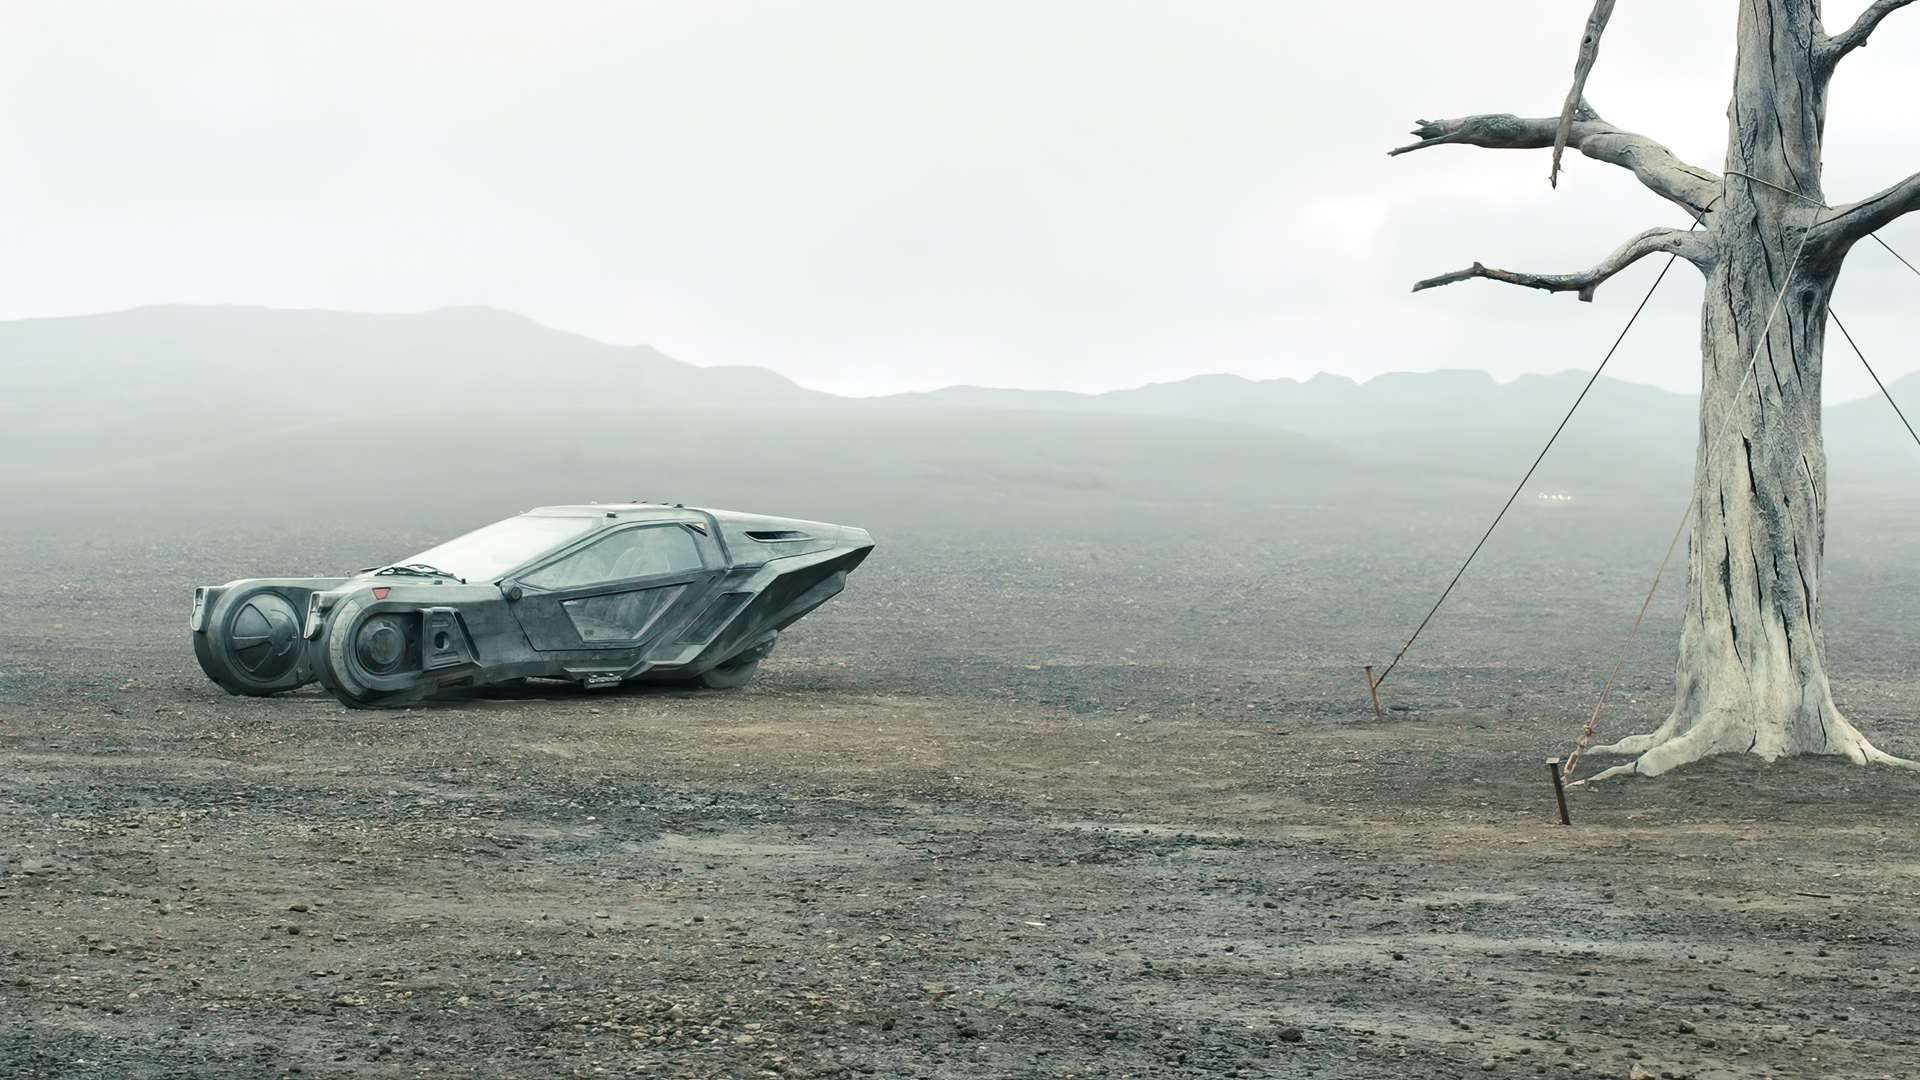 Blade Runner 2049 Movies Film Stills Cyberpunk Spinner Futuristic Dead Trees Mist Vehicle Minimalism 1920x1080